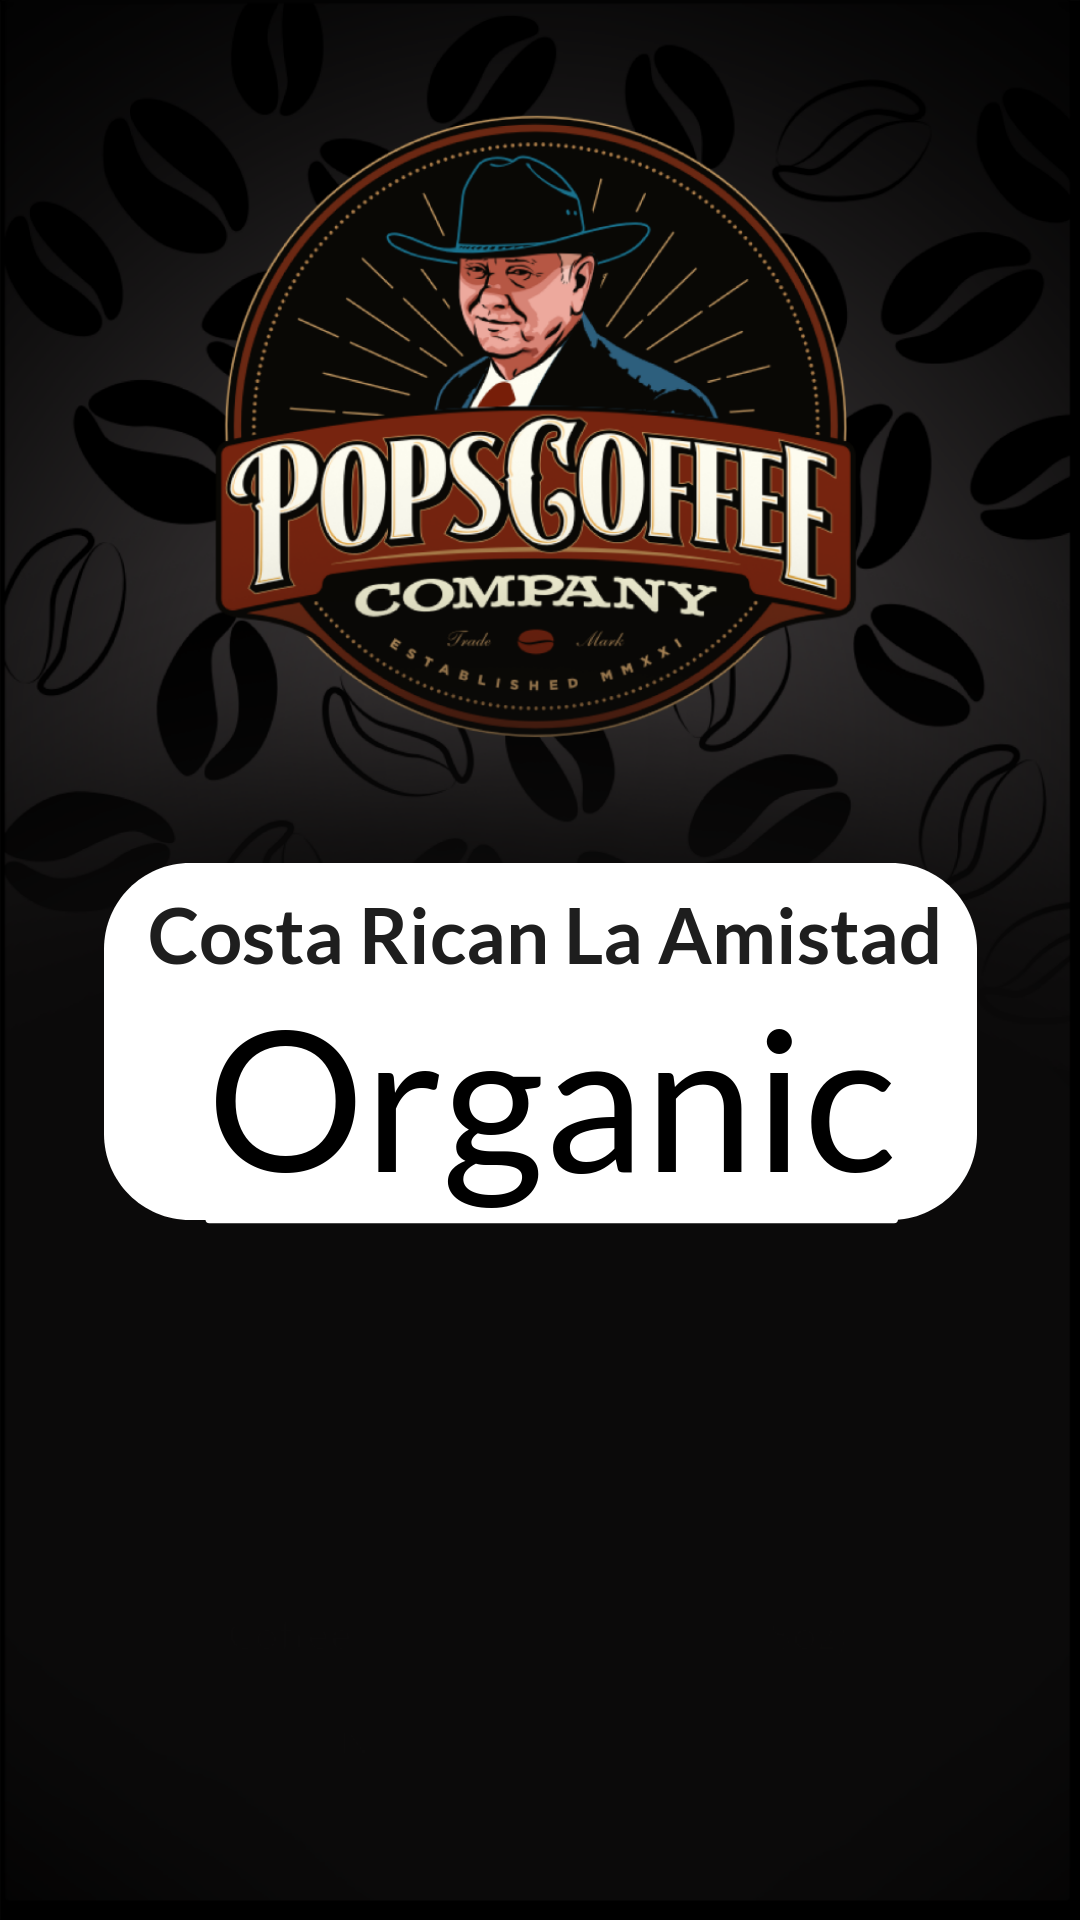 Costa Rica La Amistad - Organic